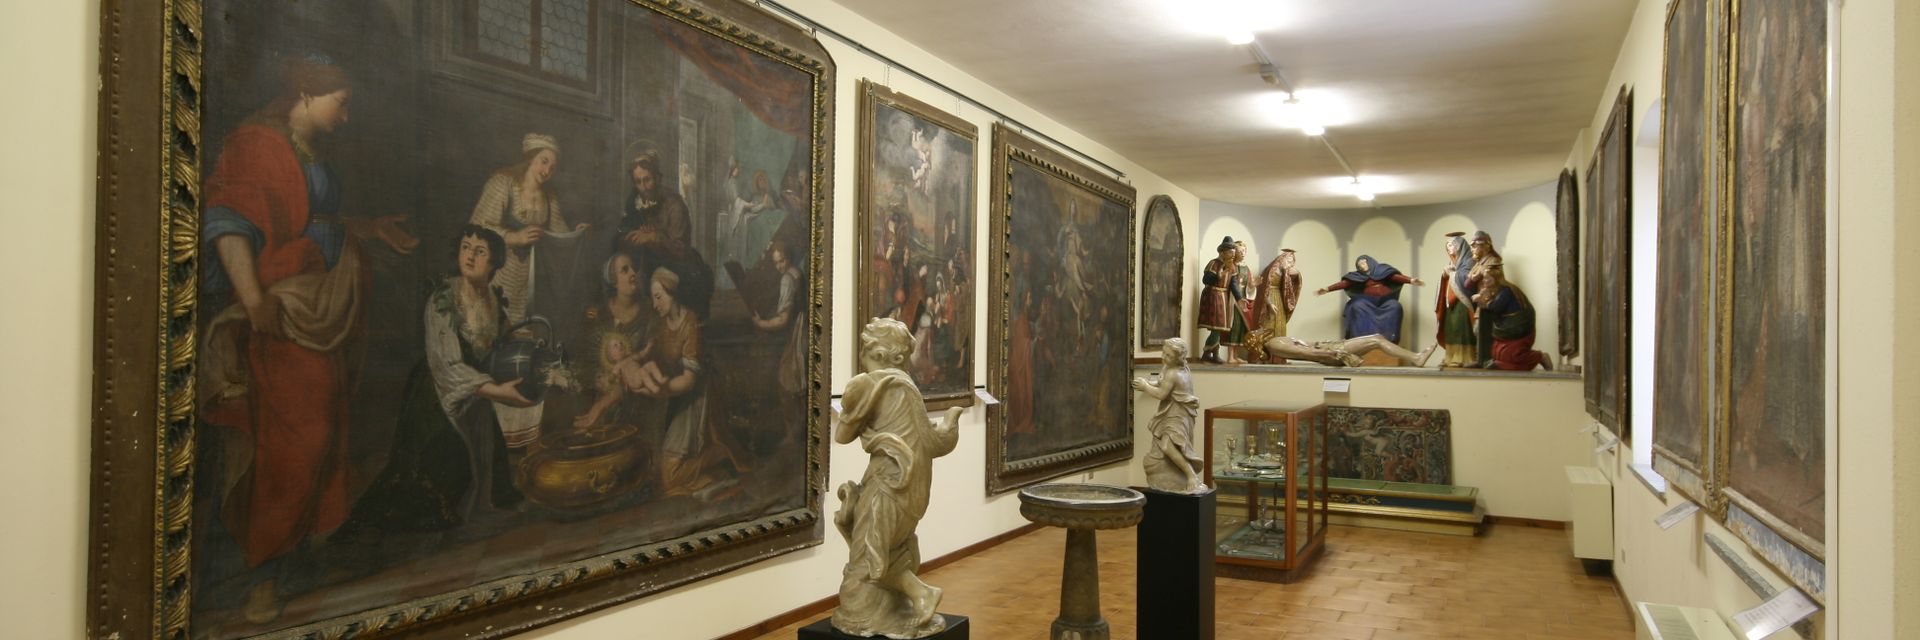 Museo Parroquial de Arte Sacro de Ornavasso